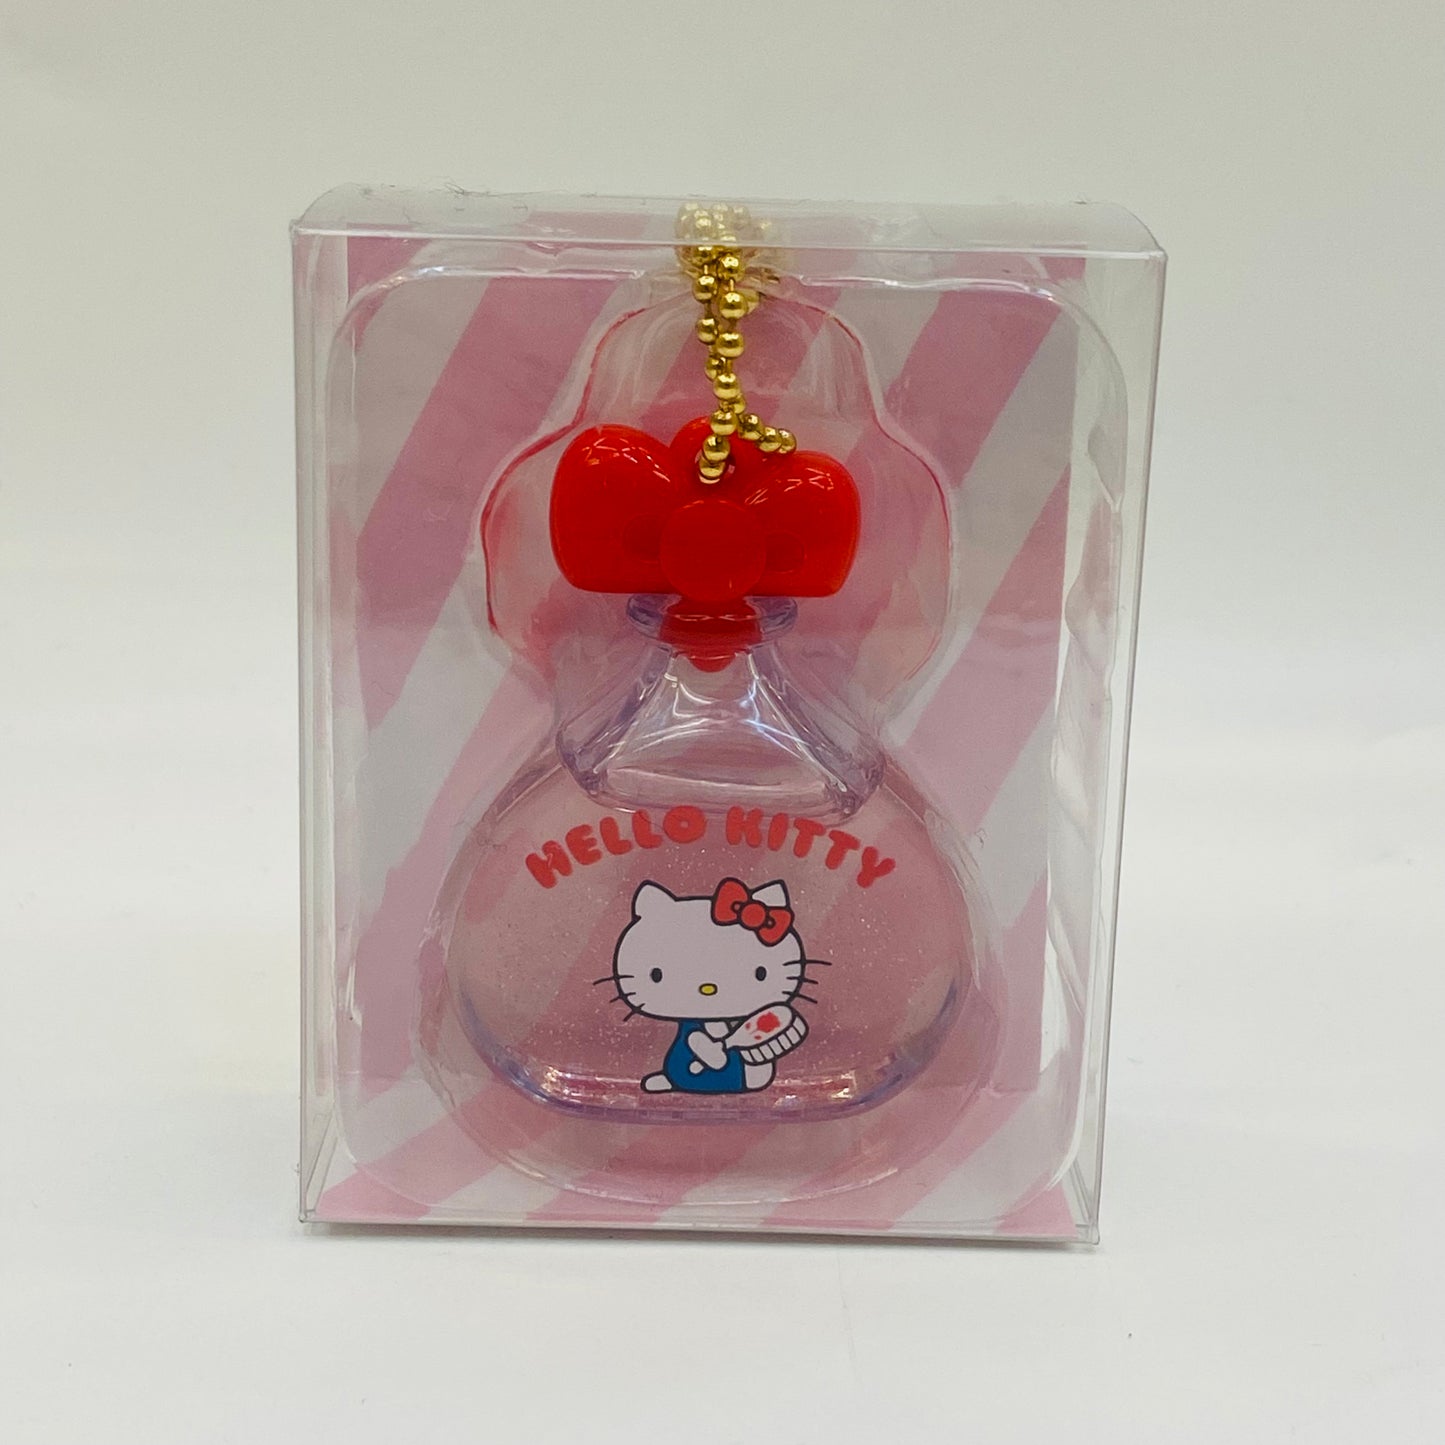 Sanrio Keychain with Bottle Mascot